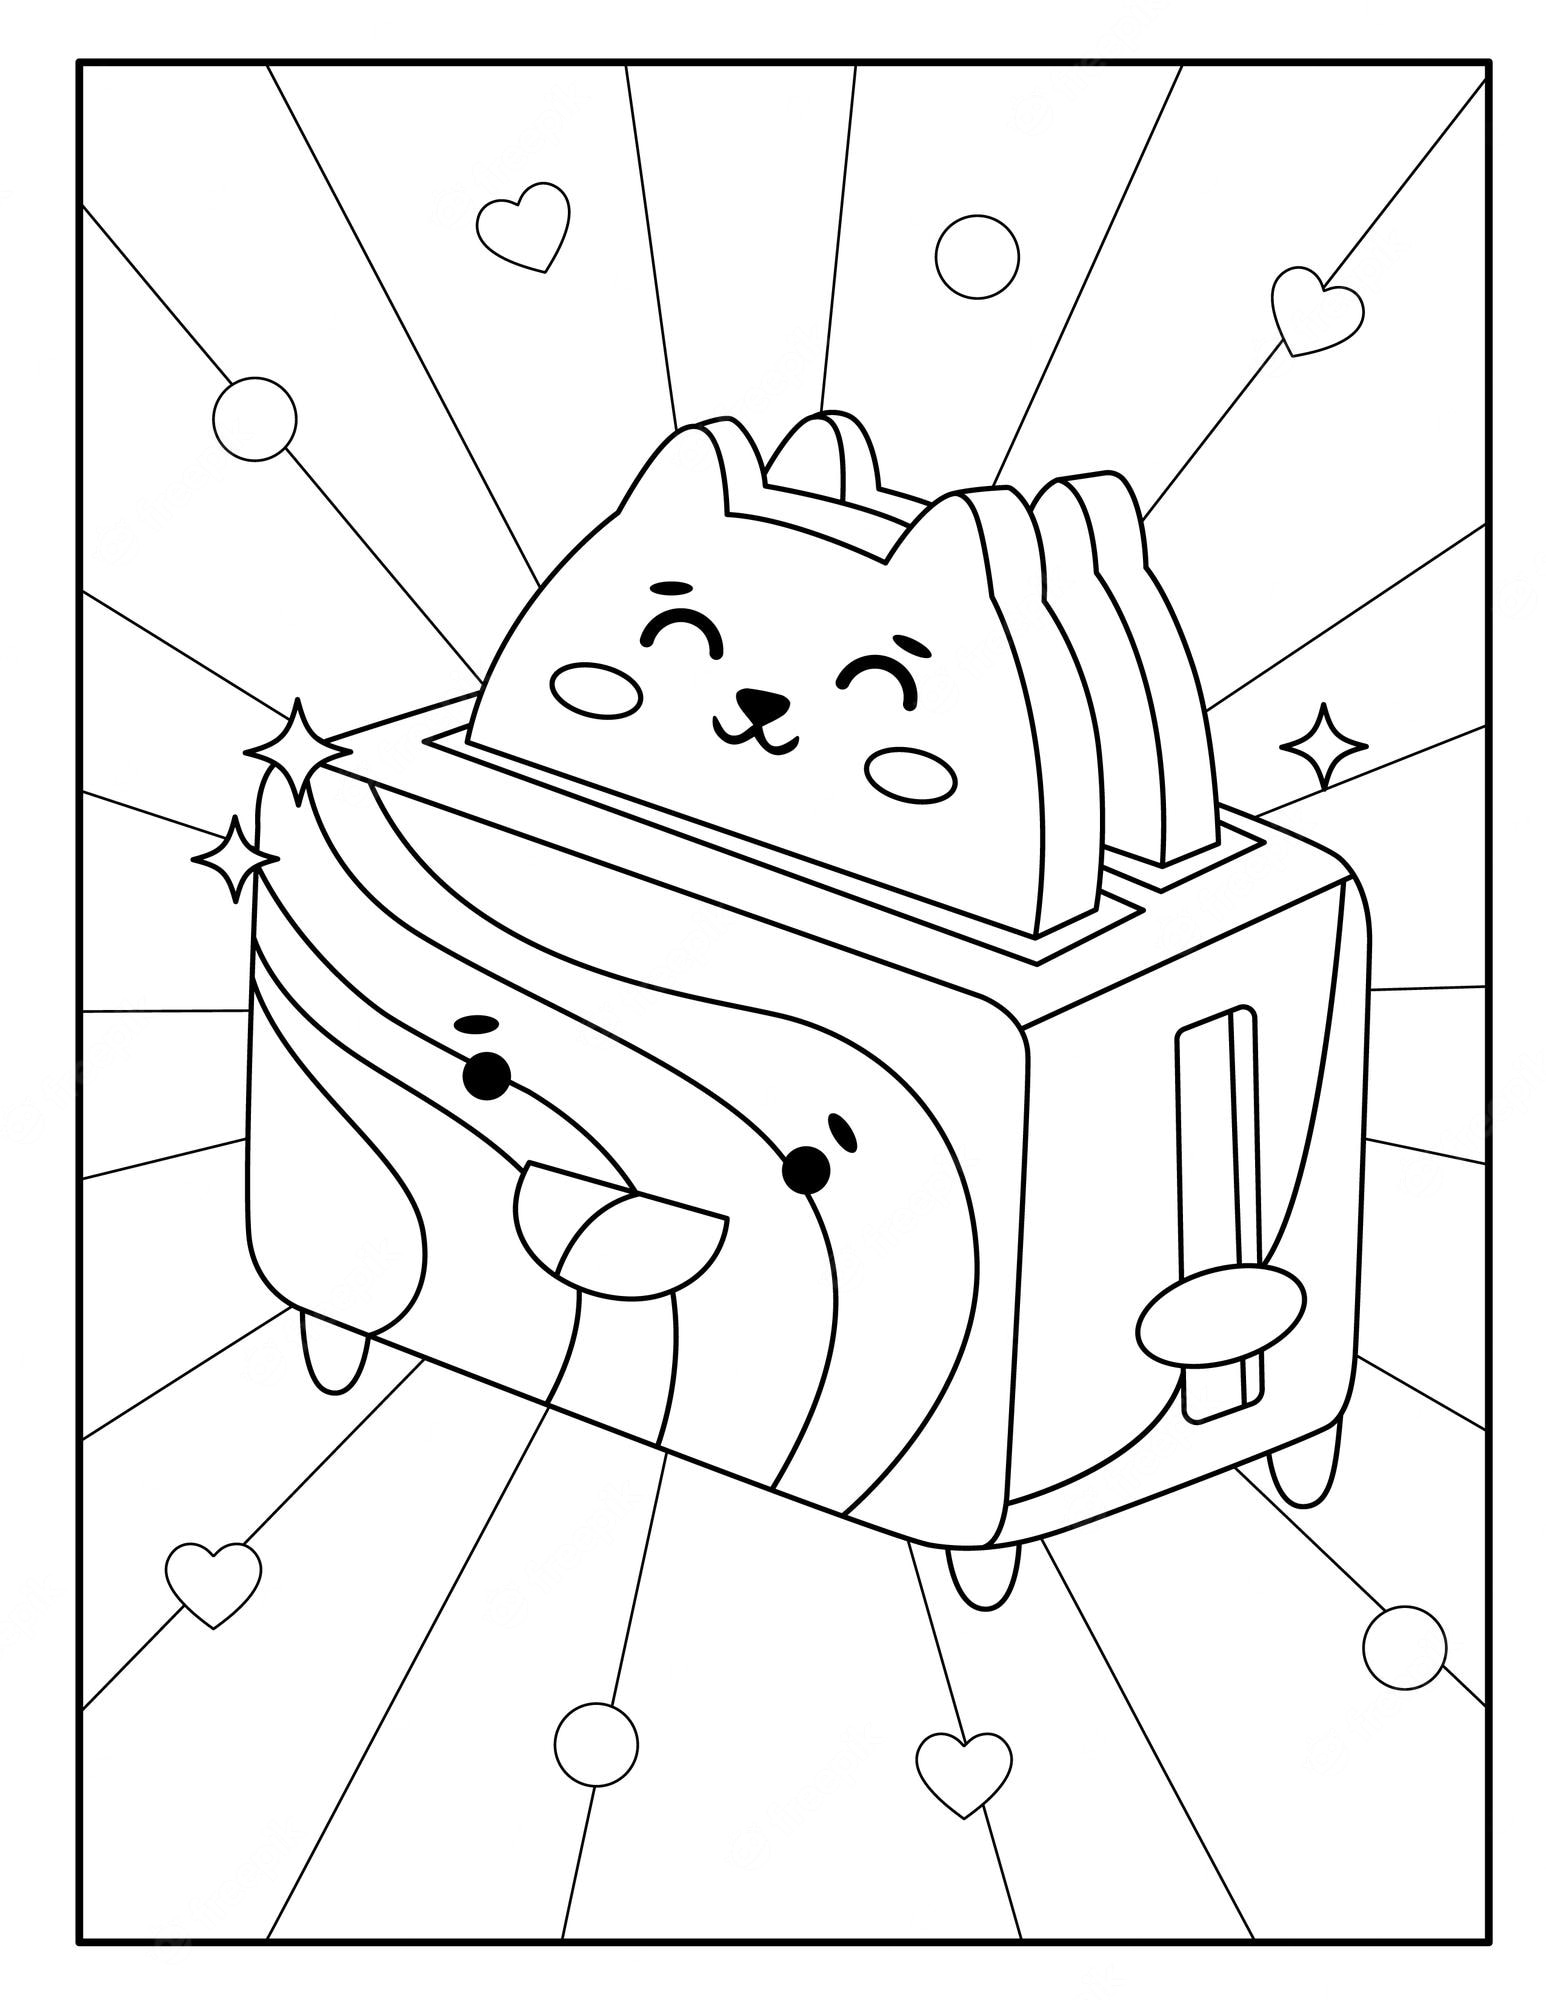 Premium Vector | Kawaii toast maker coloring page